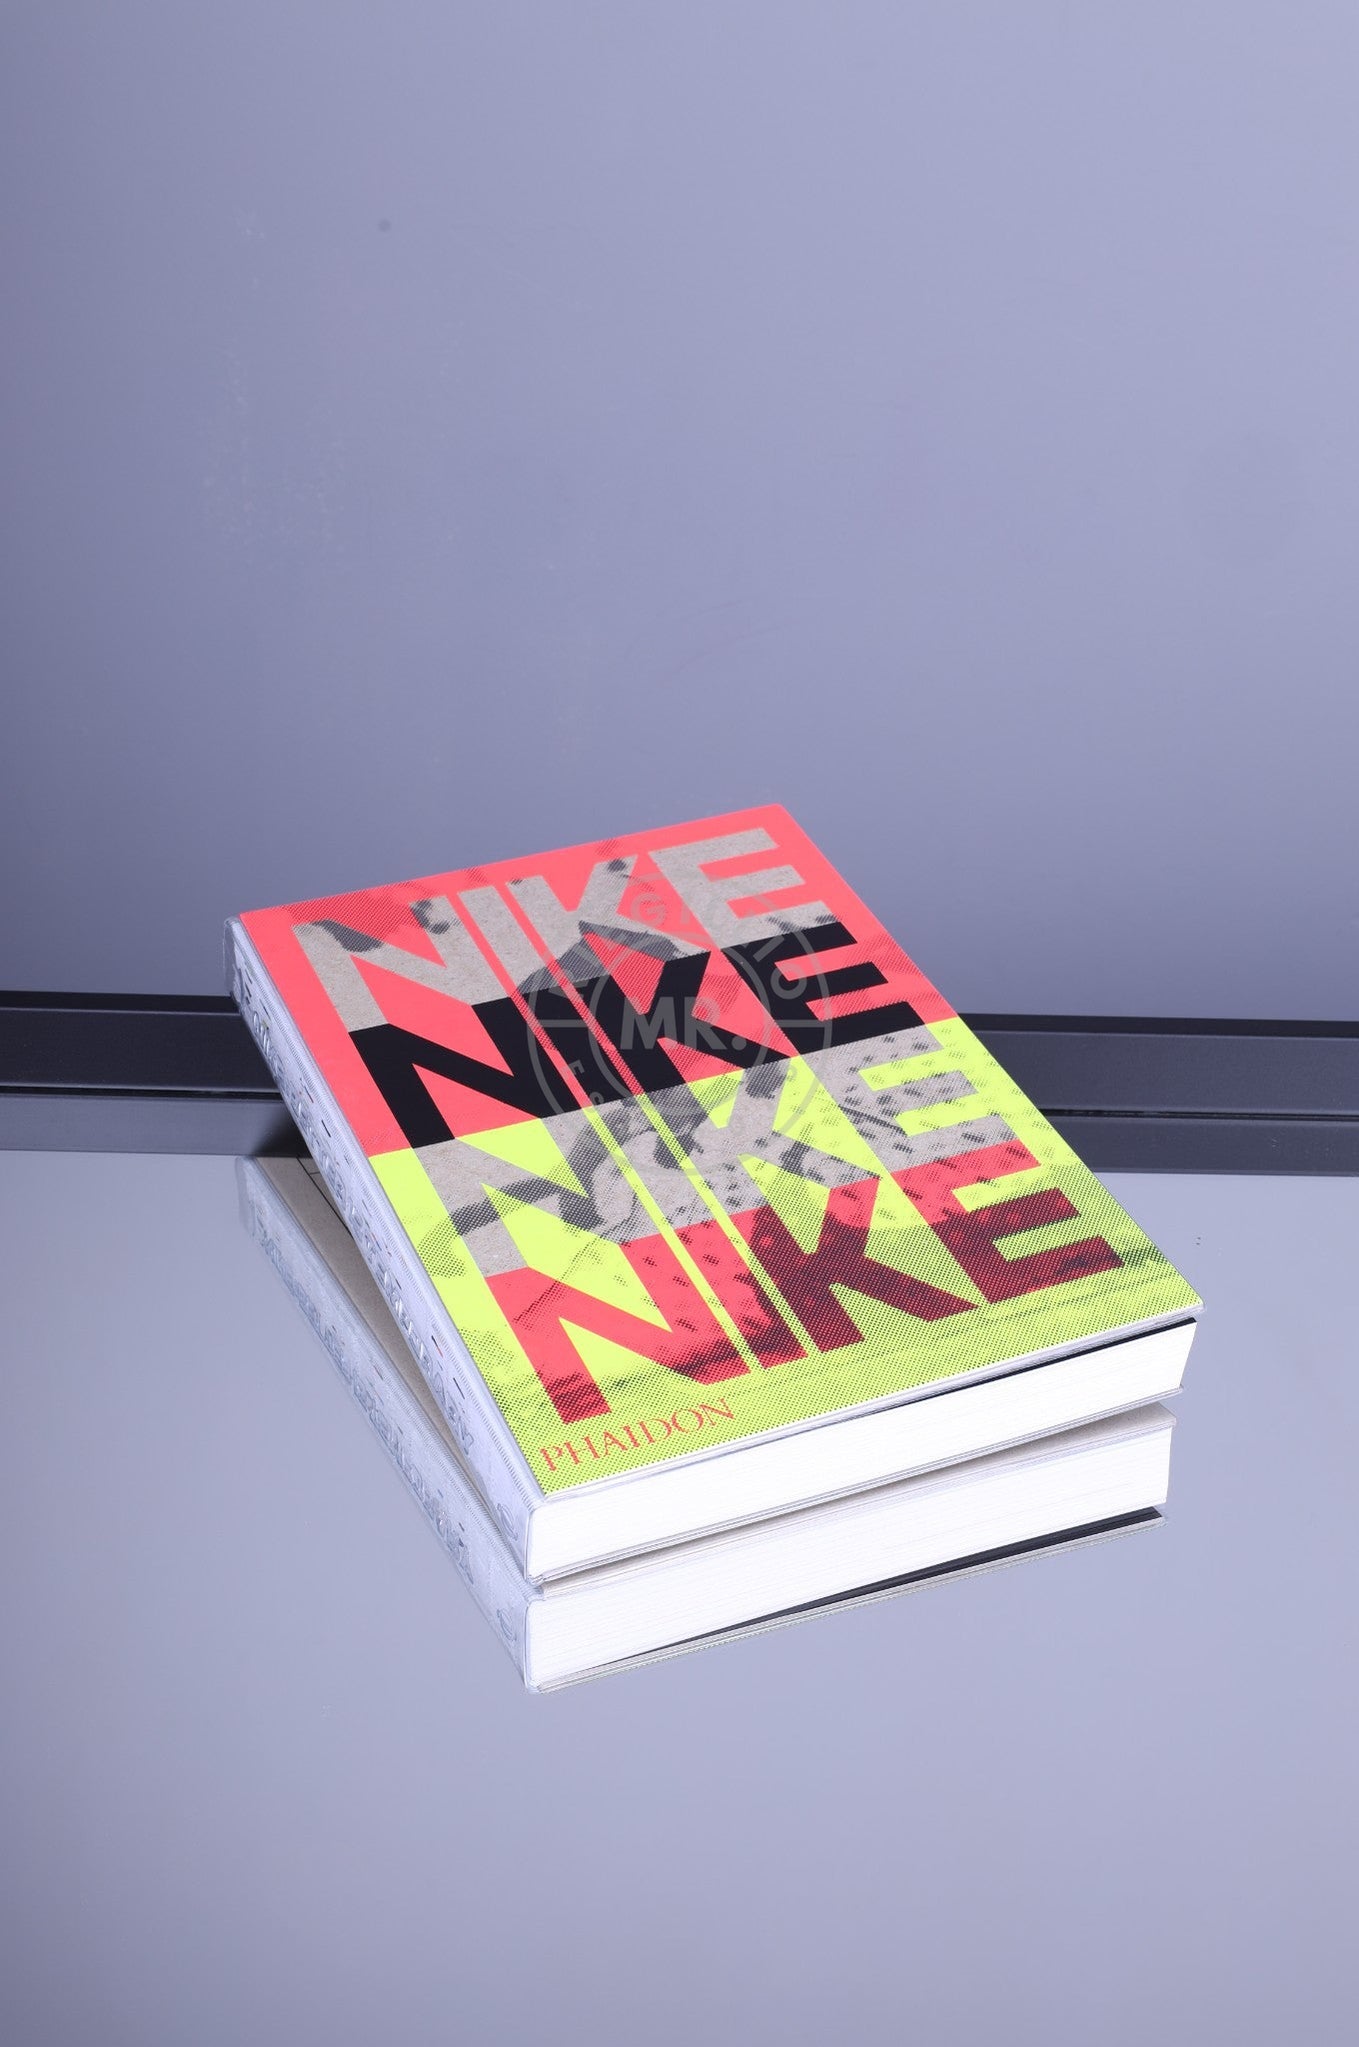 Table Book NIKE Sneakers-at MR. Riegillio